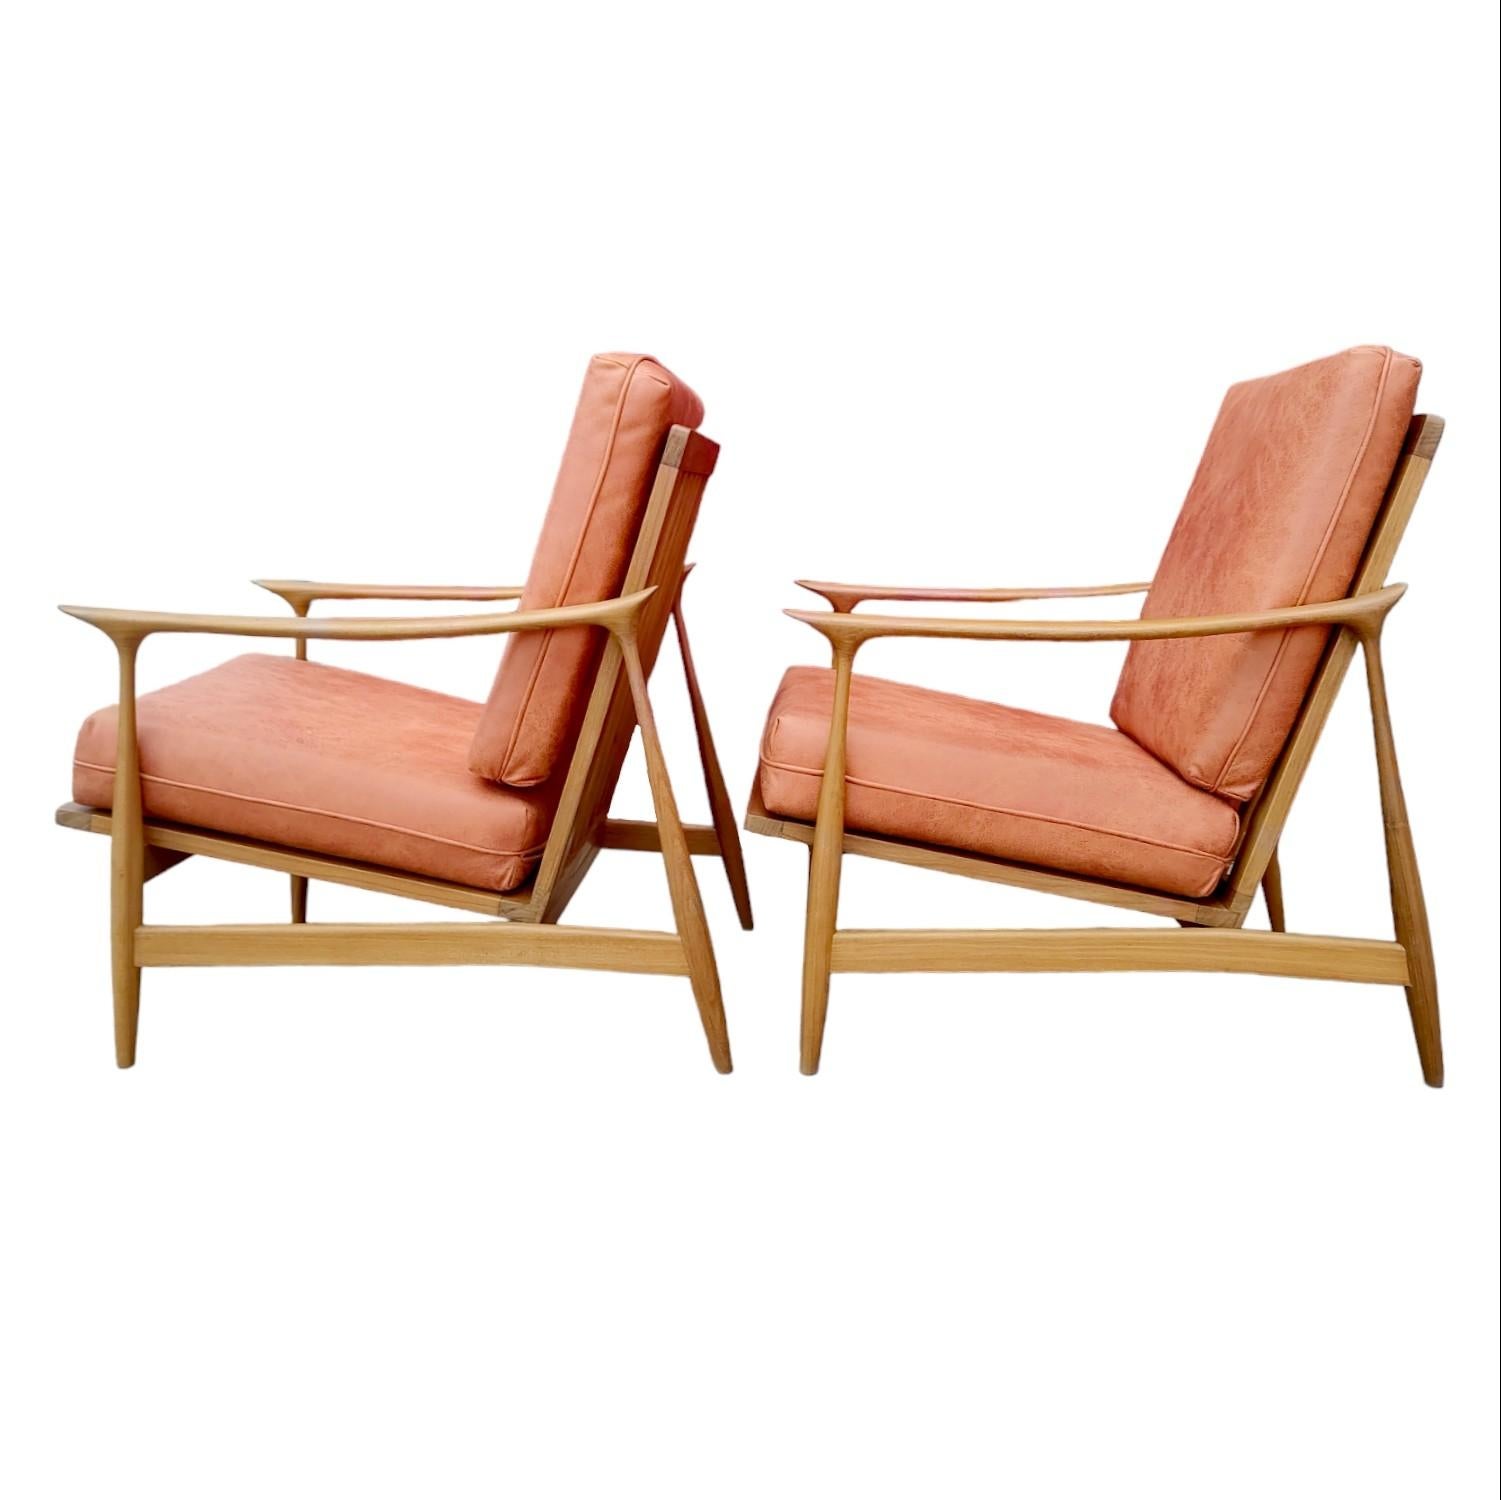 20th Century Pair of Mid-Century Modern Danish Style Arm Chairs